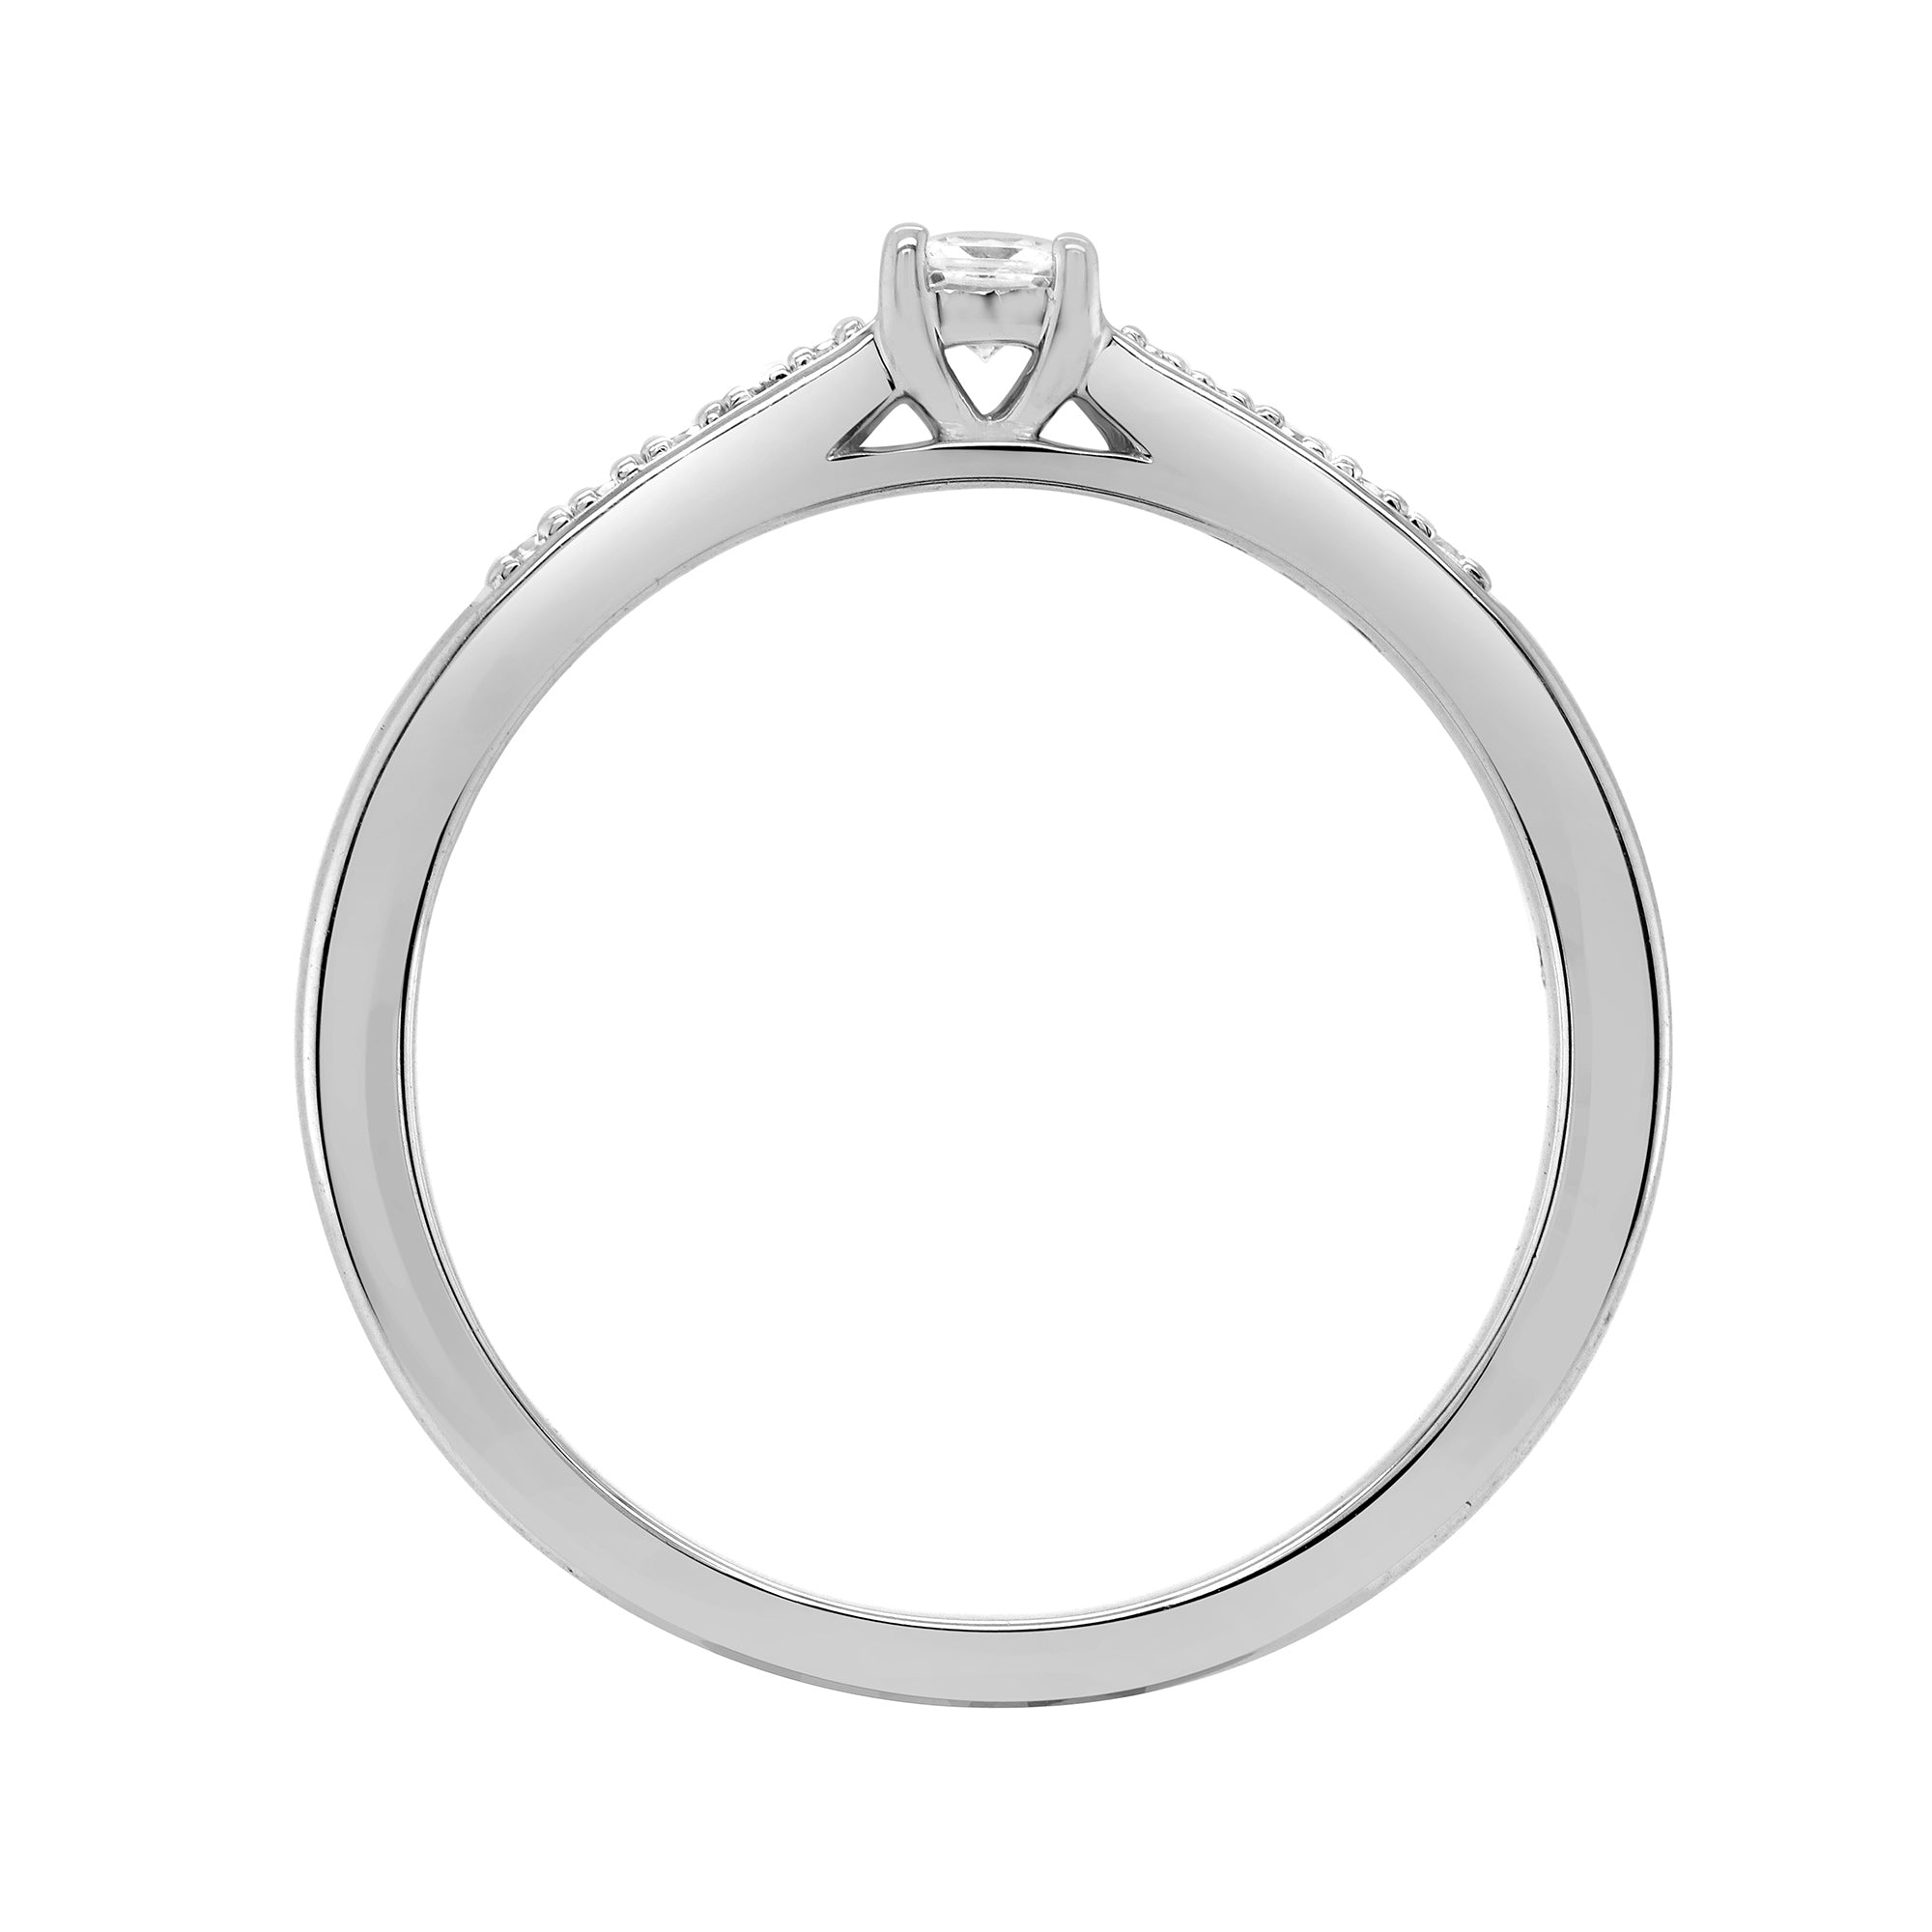 9ct white gold princess cut single stone diamond ring with diamond set shoulders 0.16ct